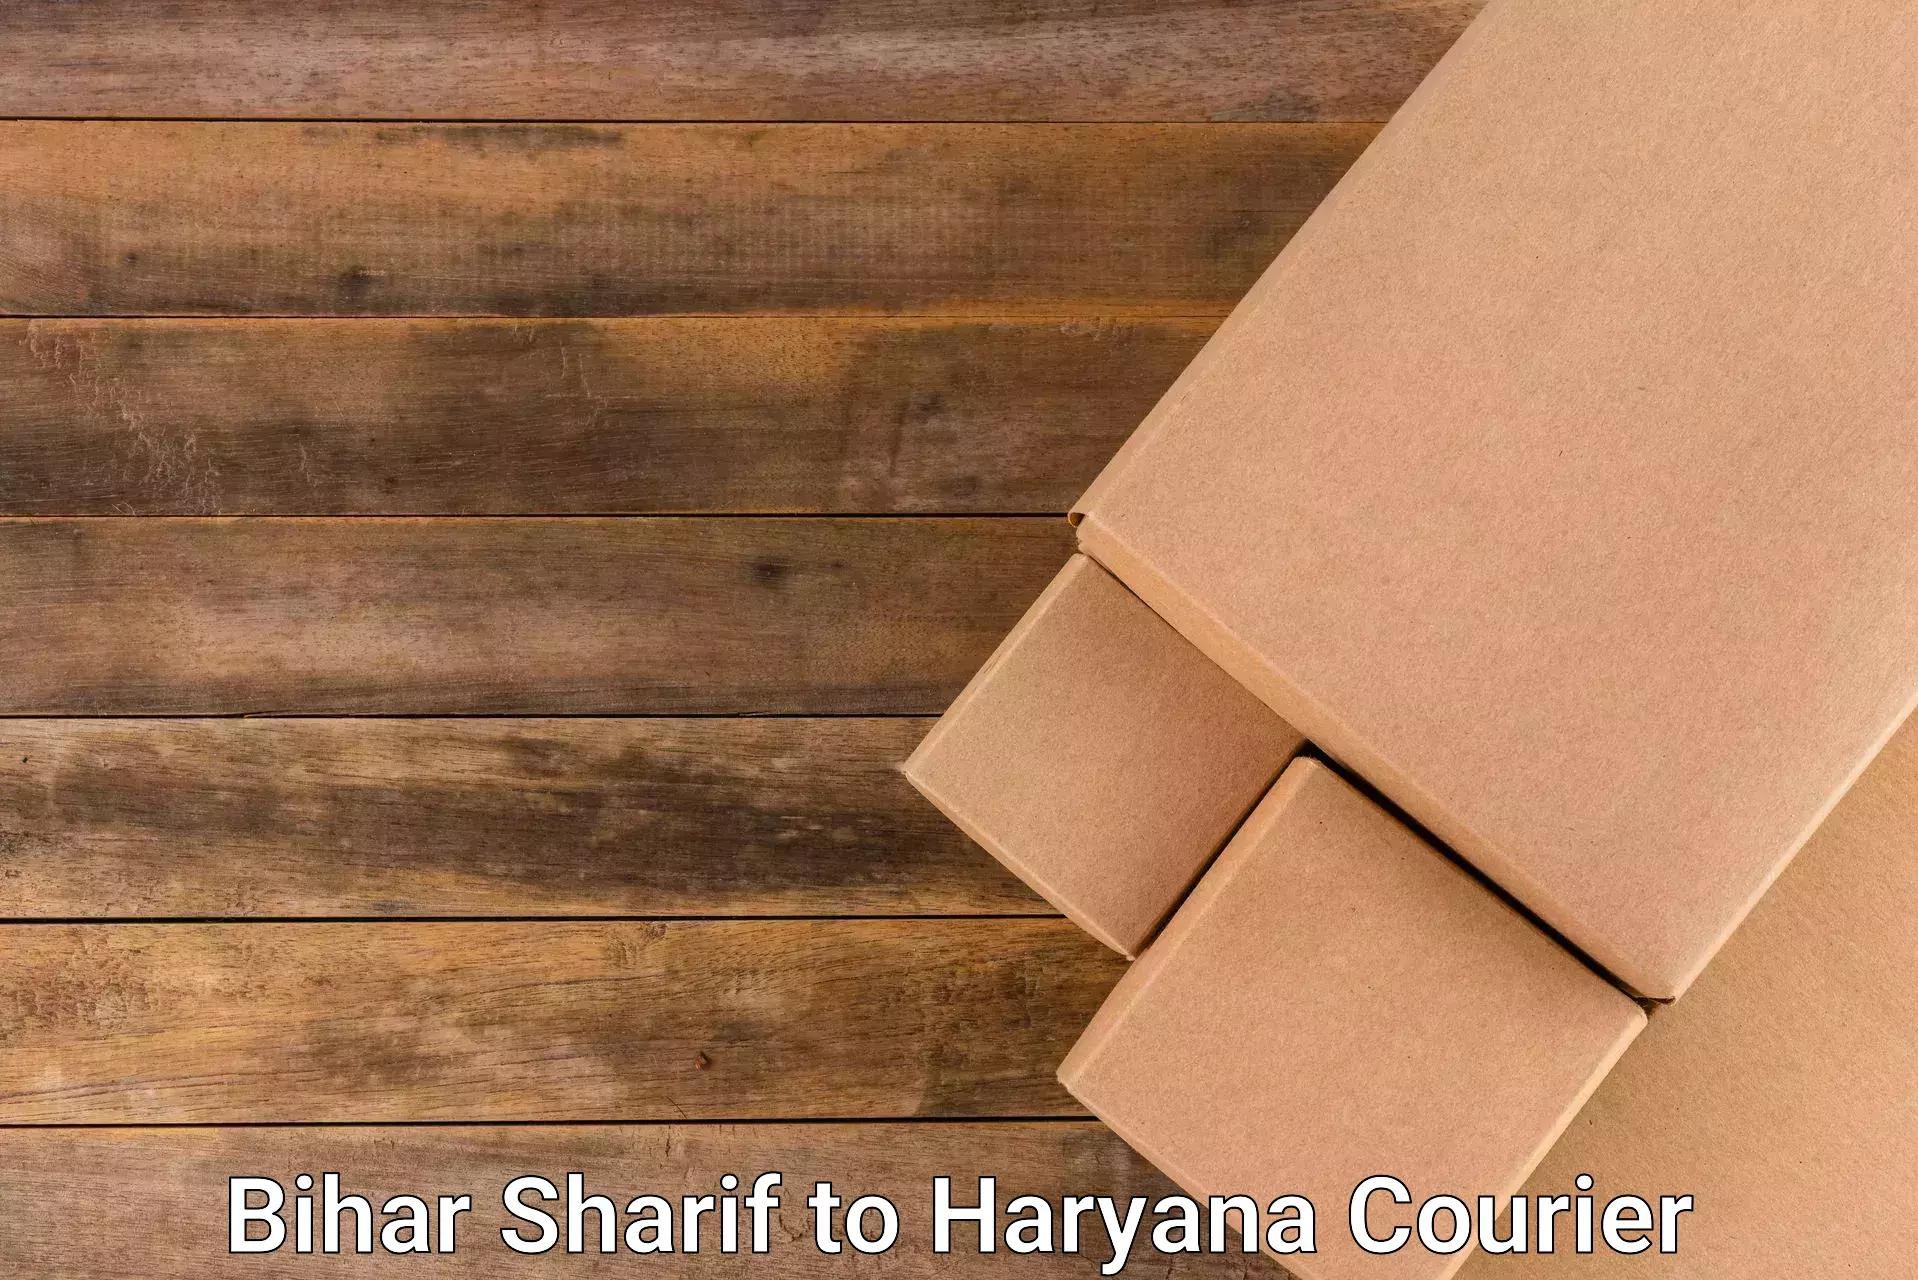 Package forwarding in Bihar Sharif to Gurgaon